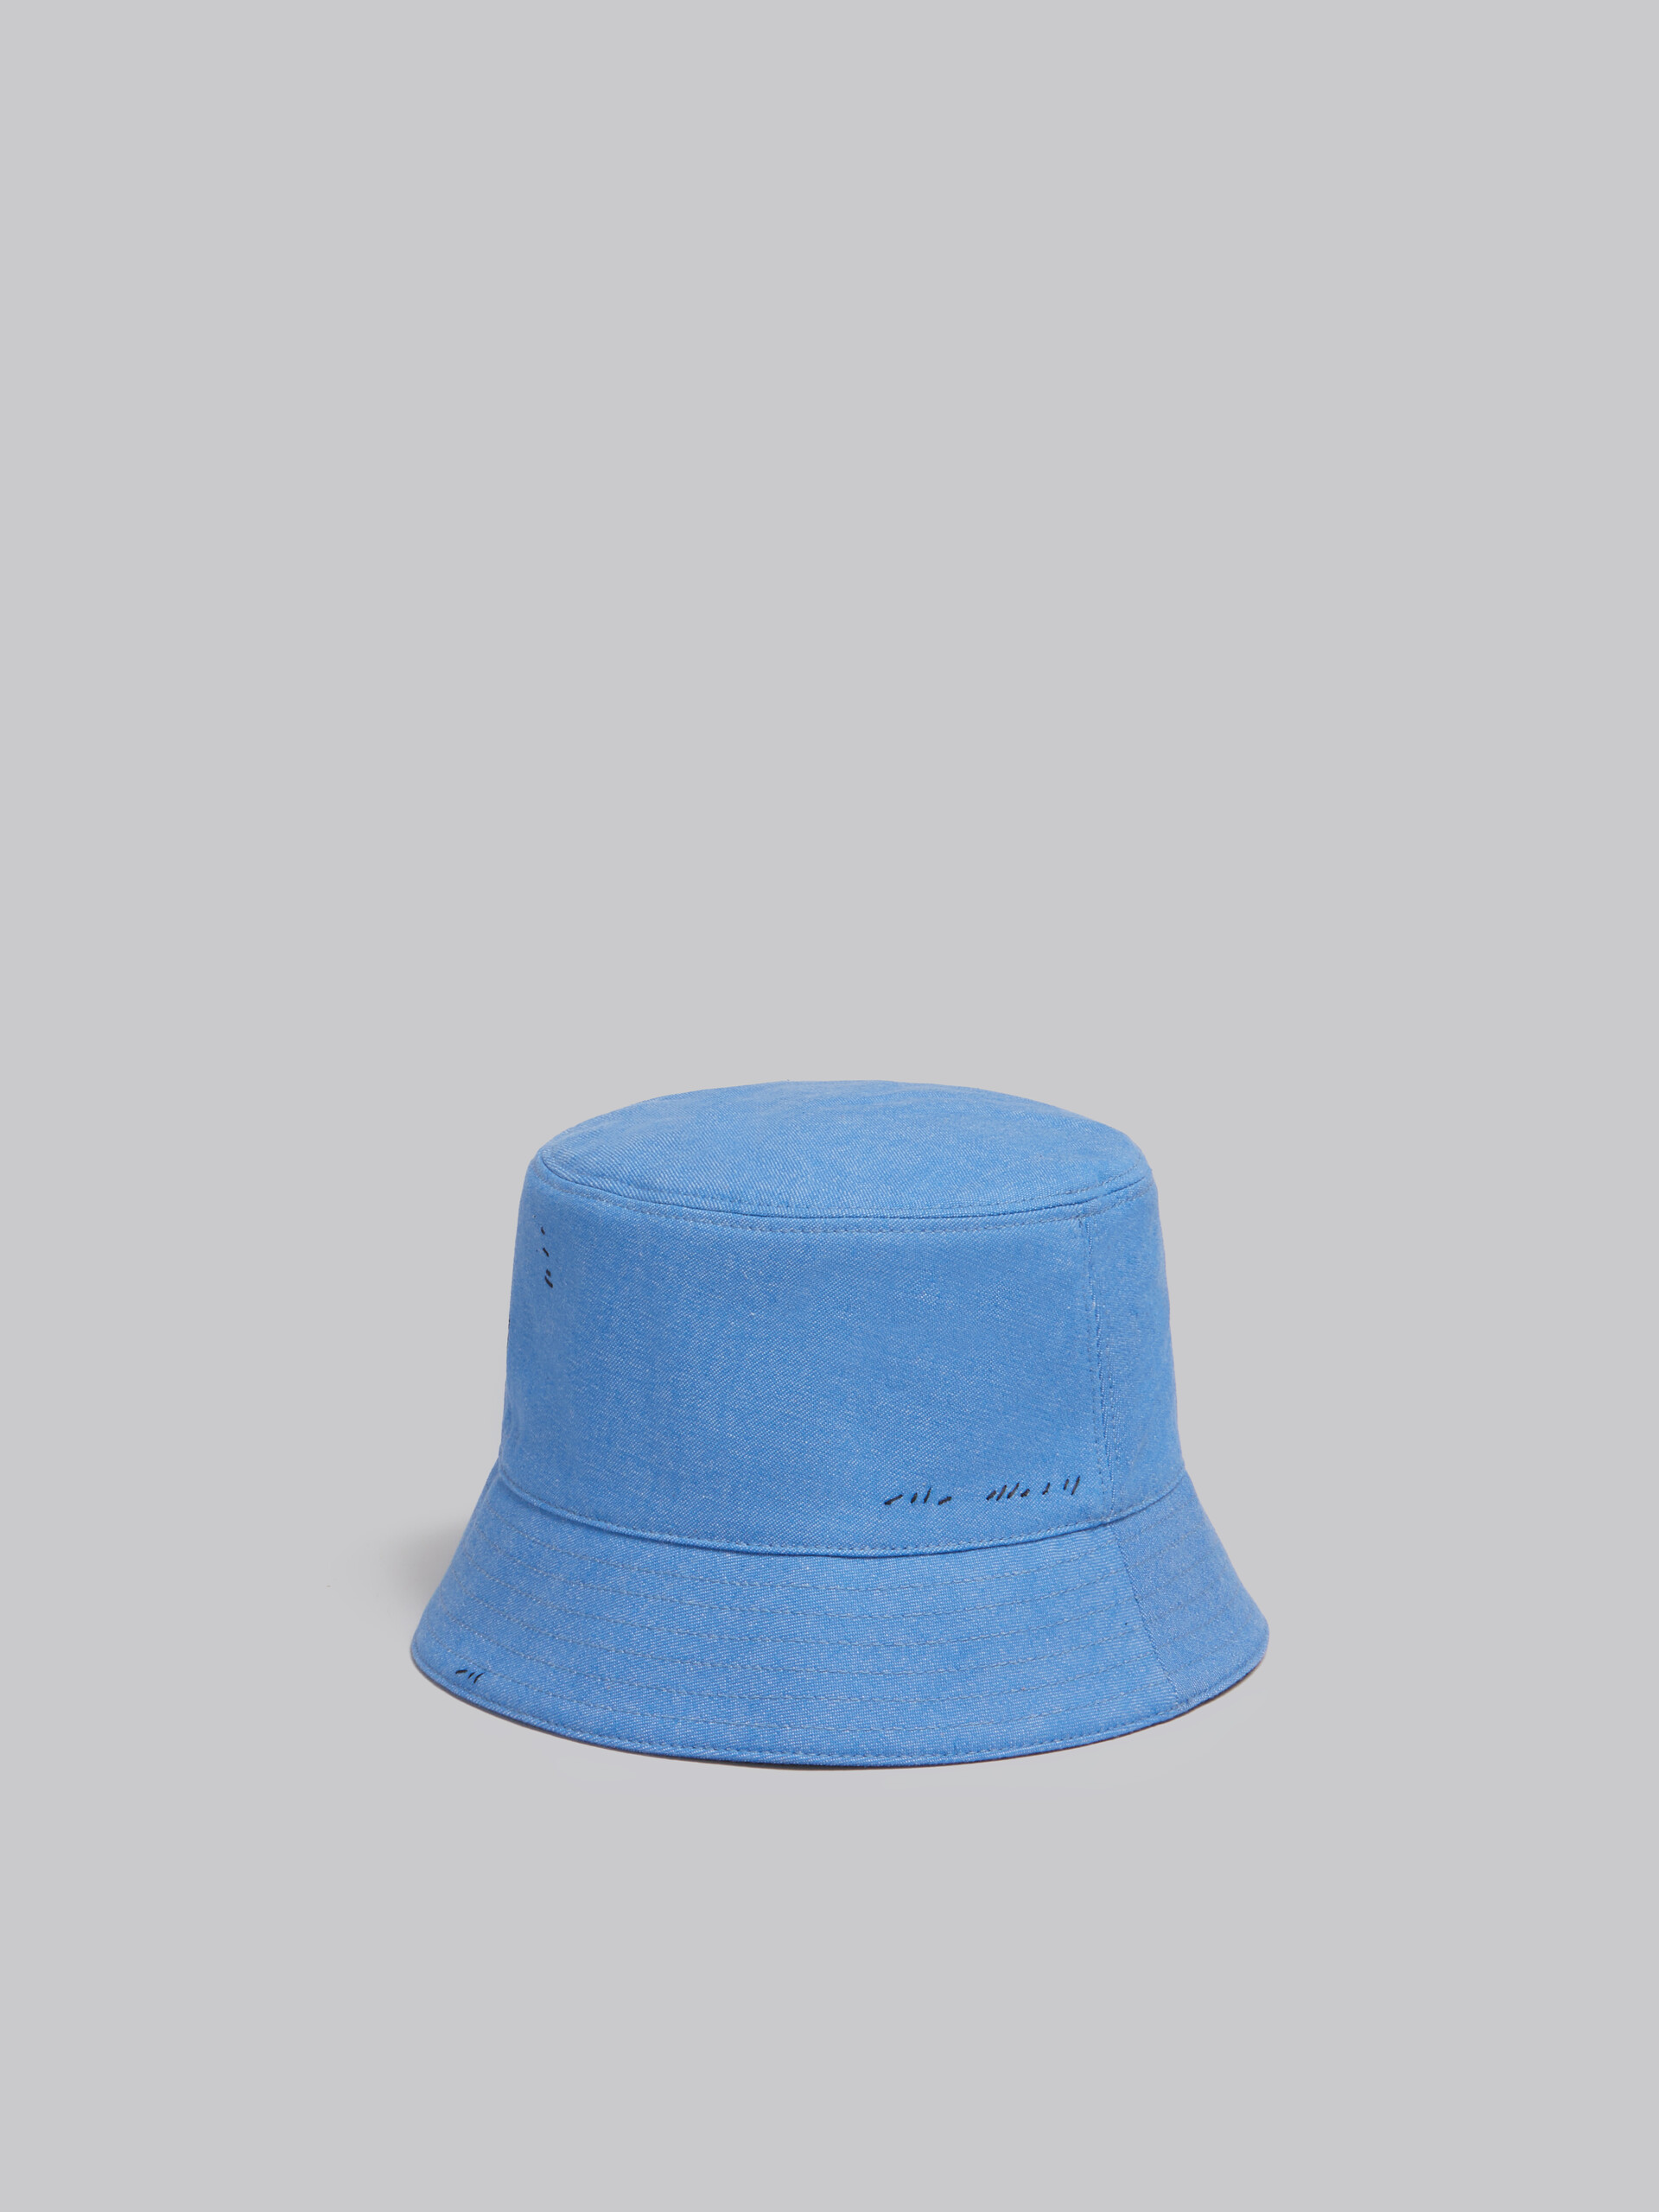 Bob en denim bleu avec effet raccommodé Marni - Chapeau - Image 3